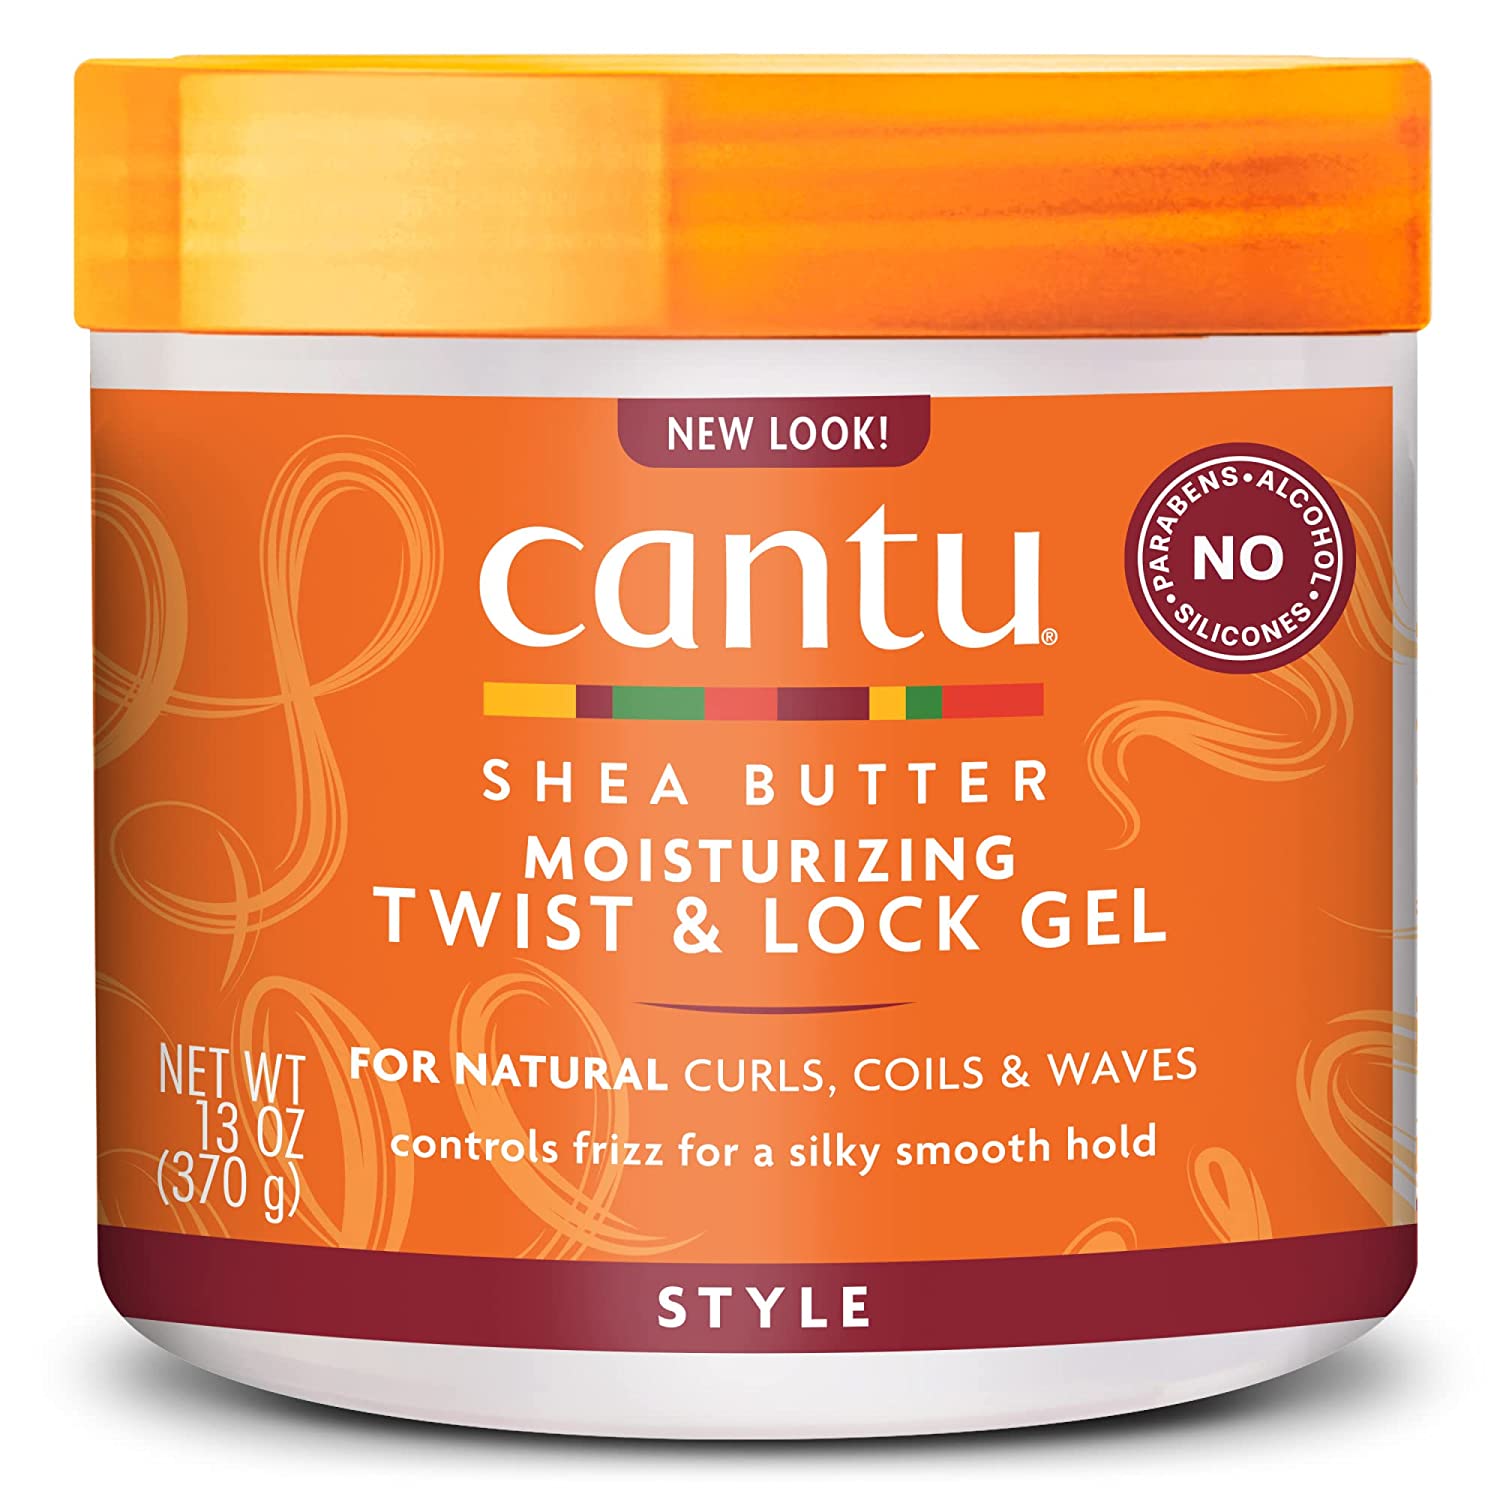 Cantu Twist & Lock Gel Frizz Control Natural Hair Product